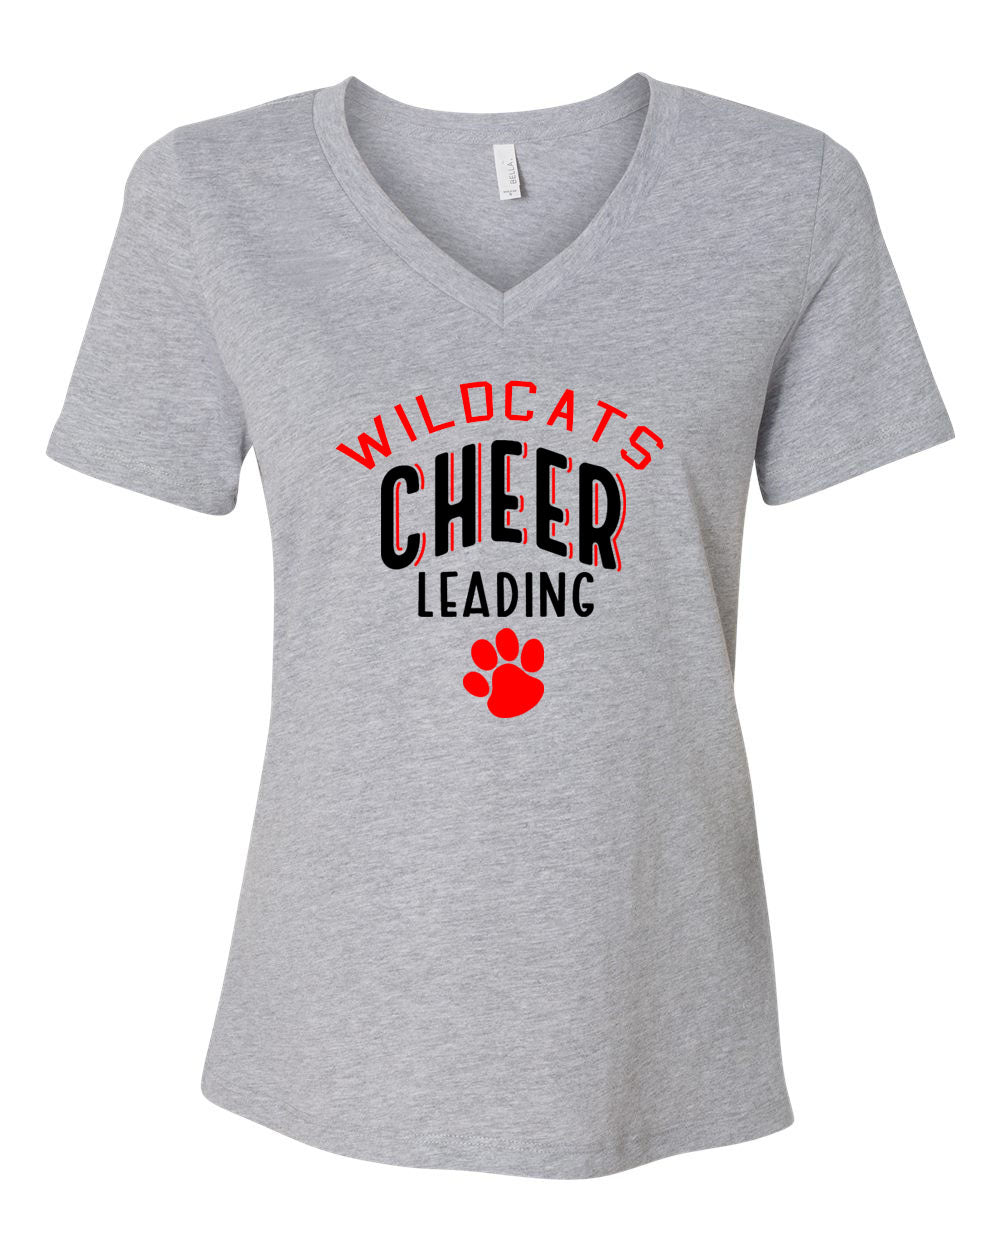 Wildcats Cheer Design 5 V-neck T-Shirt